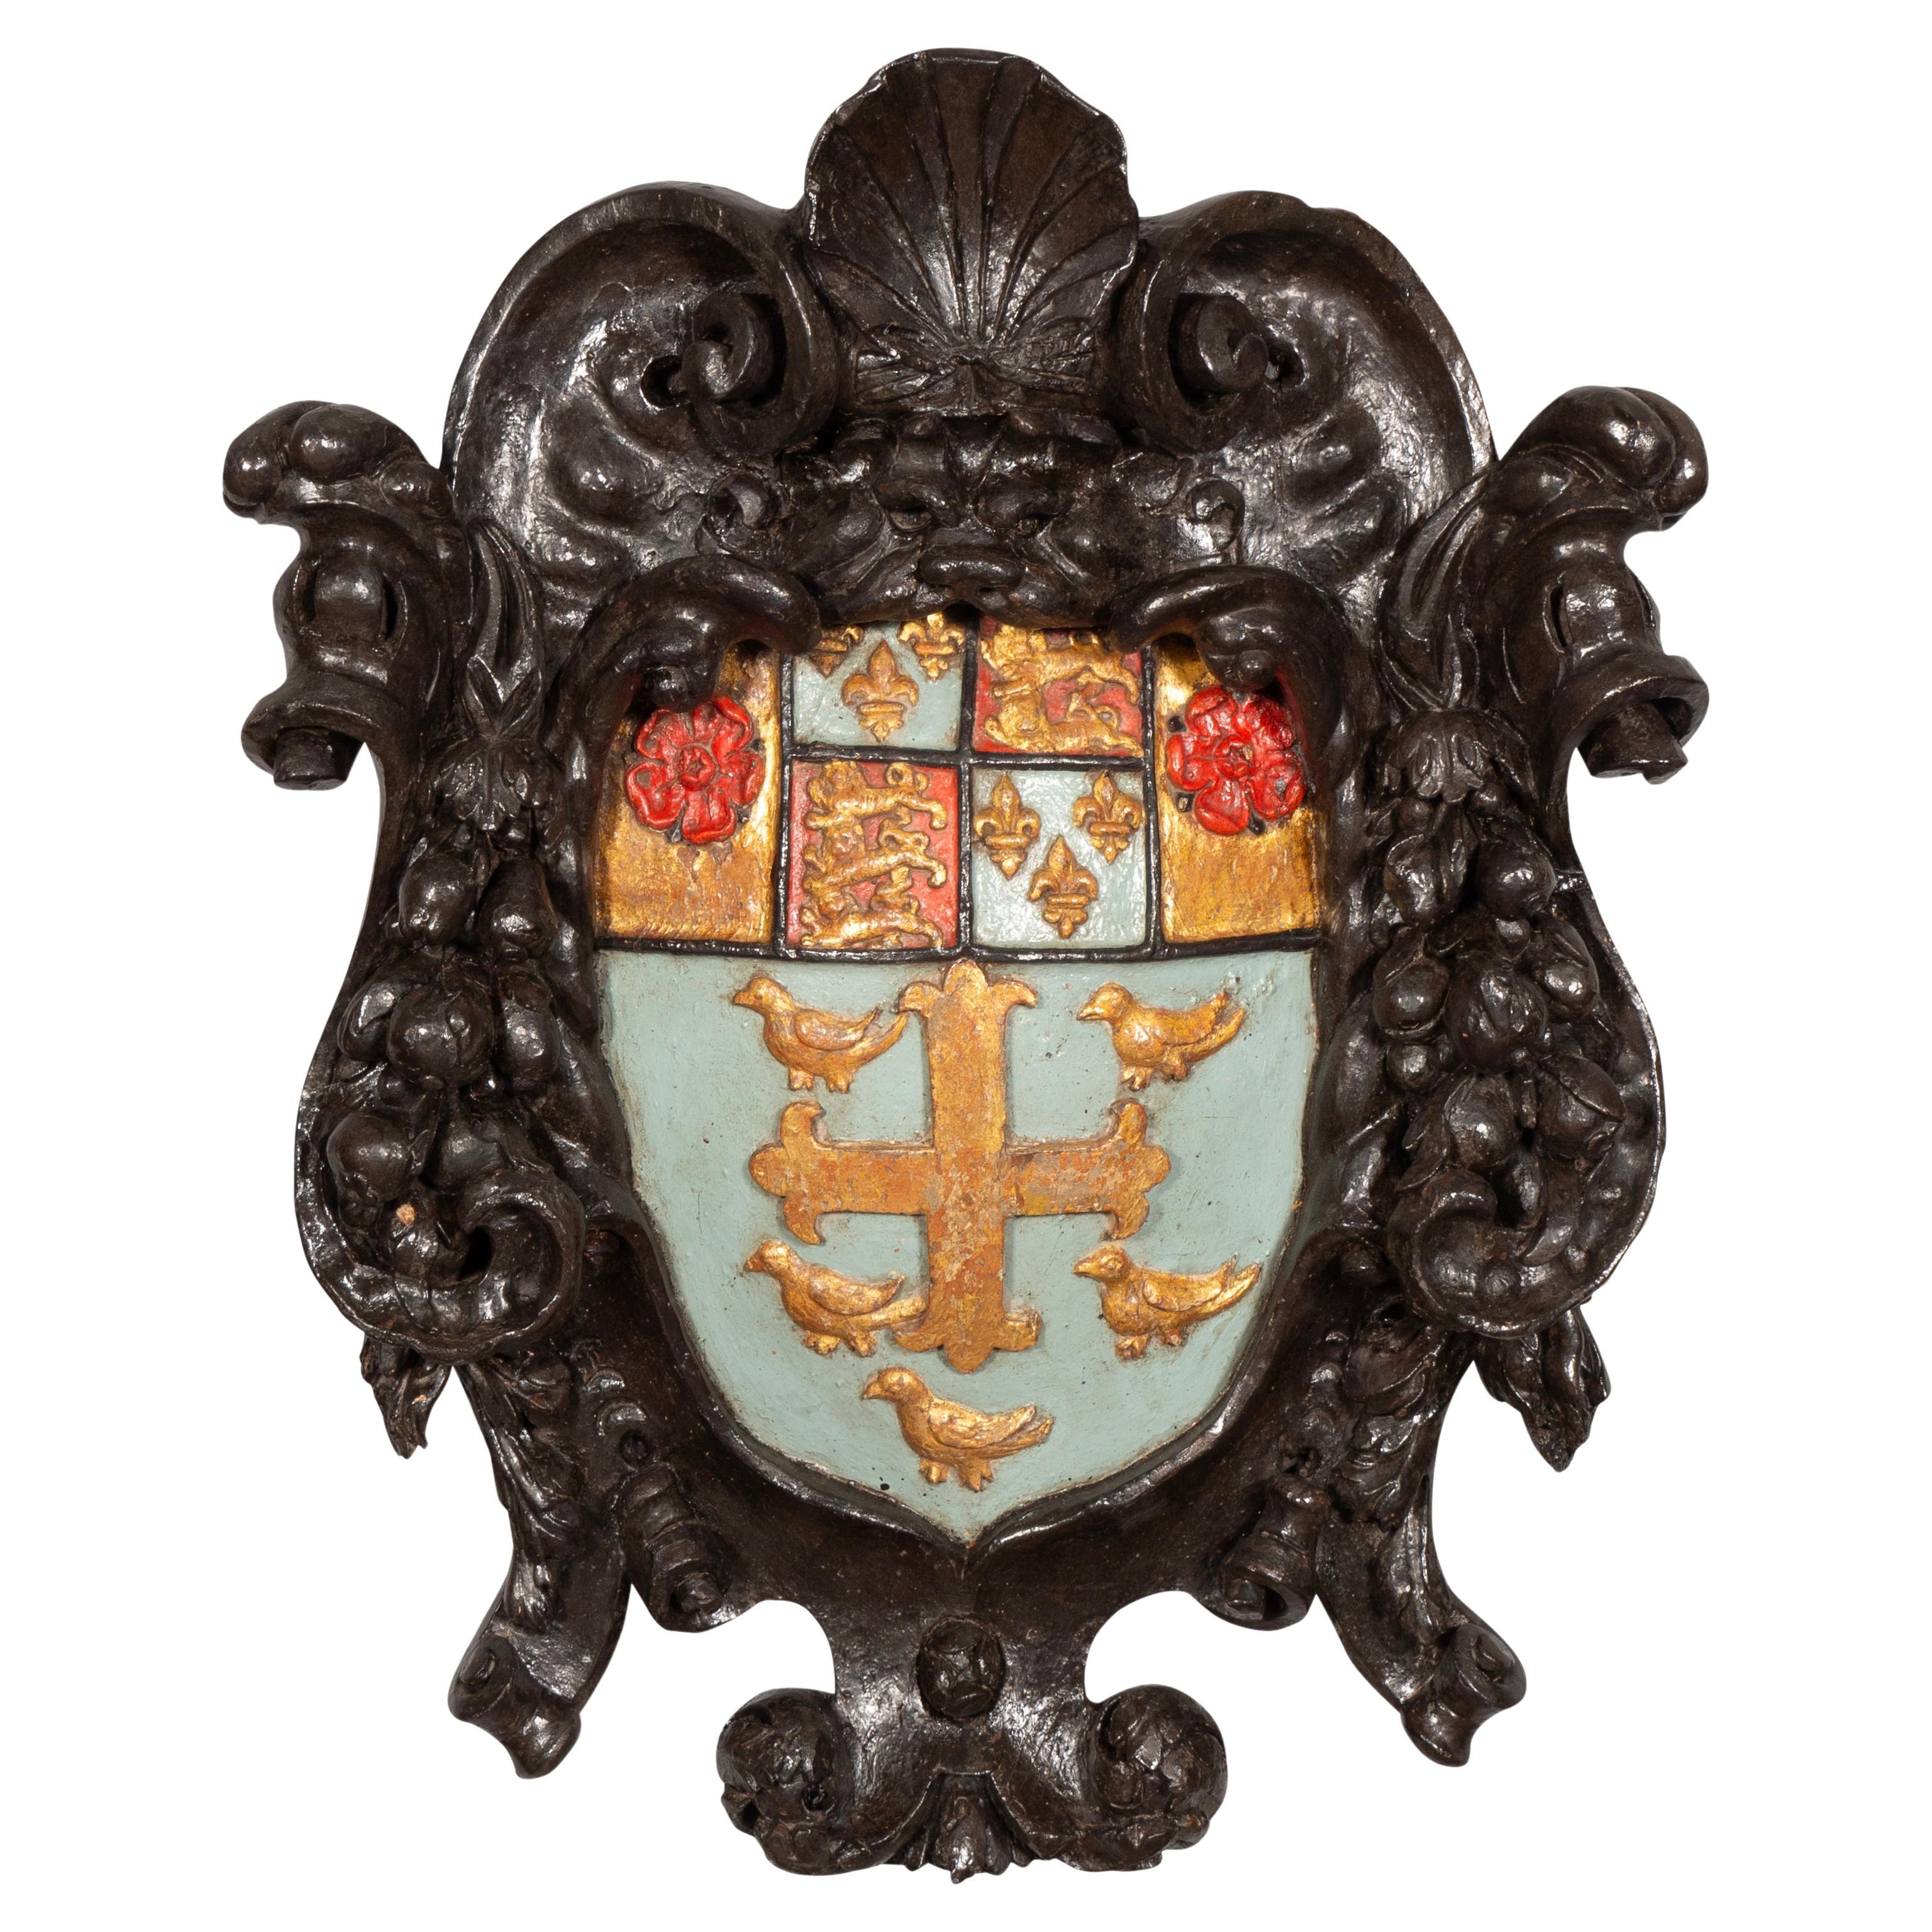 Charles II. geschnitztes Wappen der Armee der Westminster School im Angebot